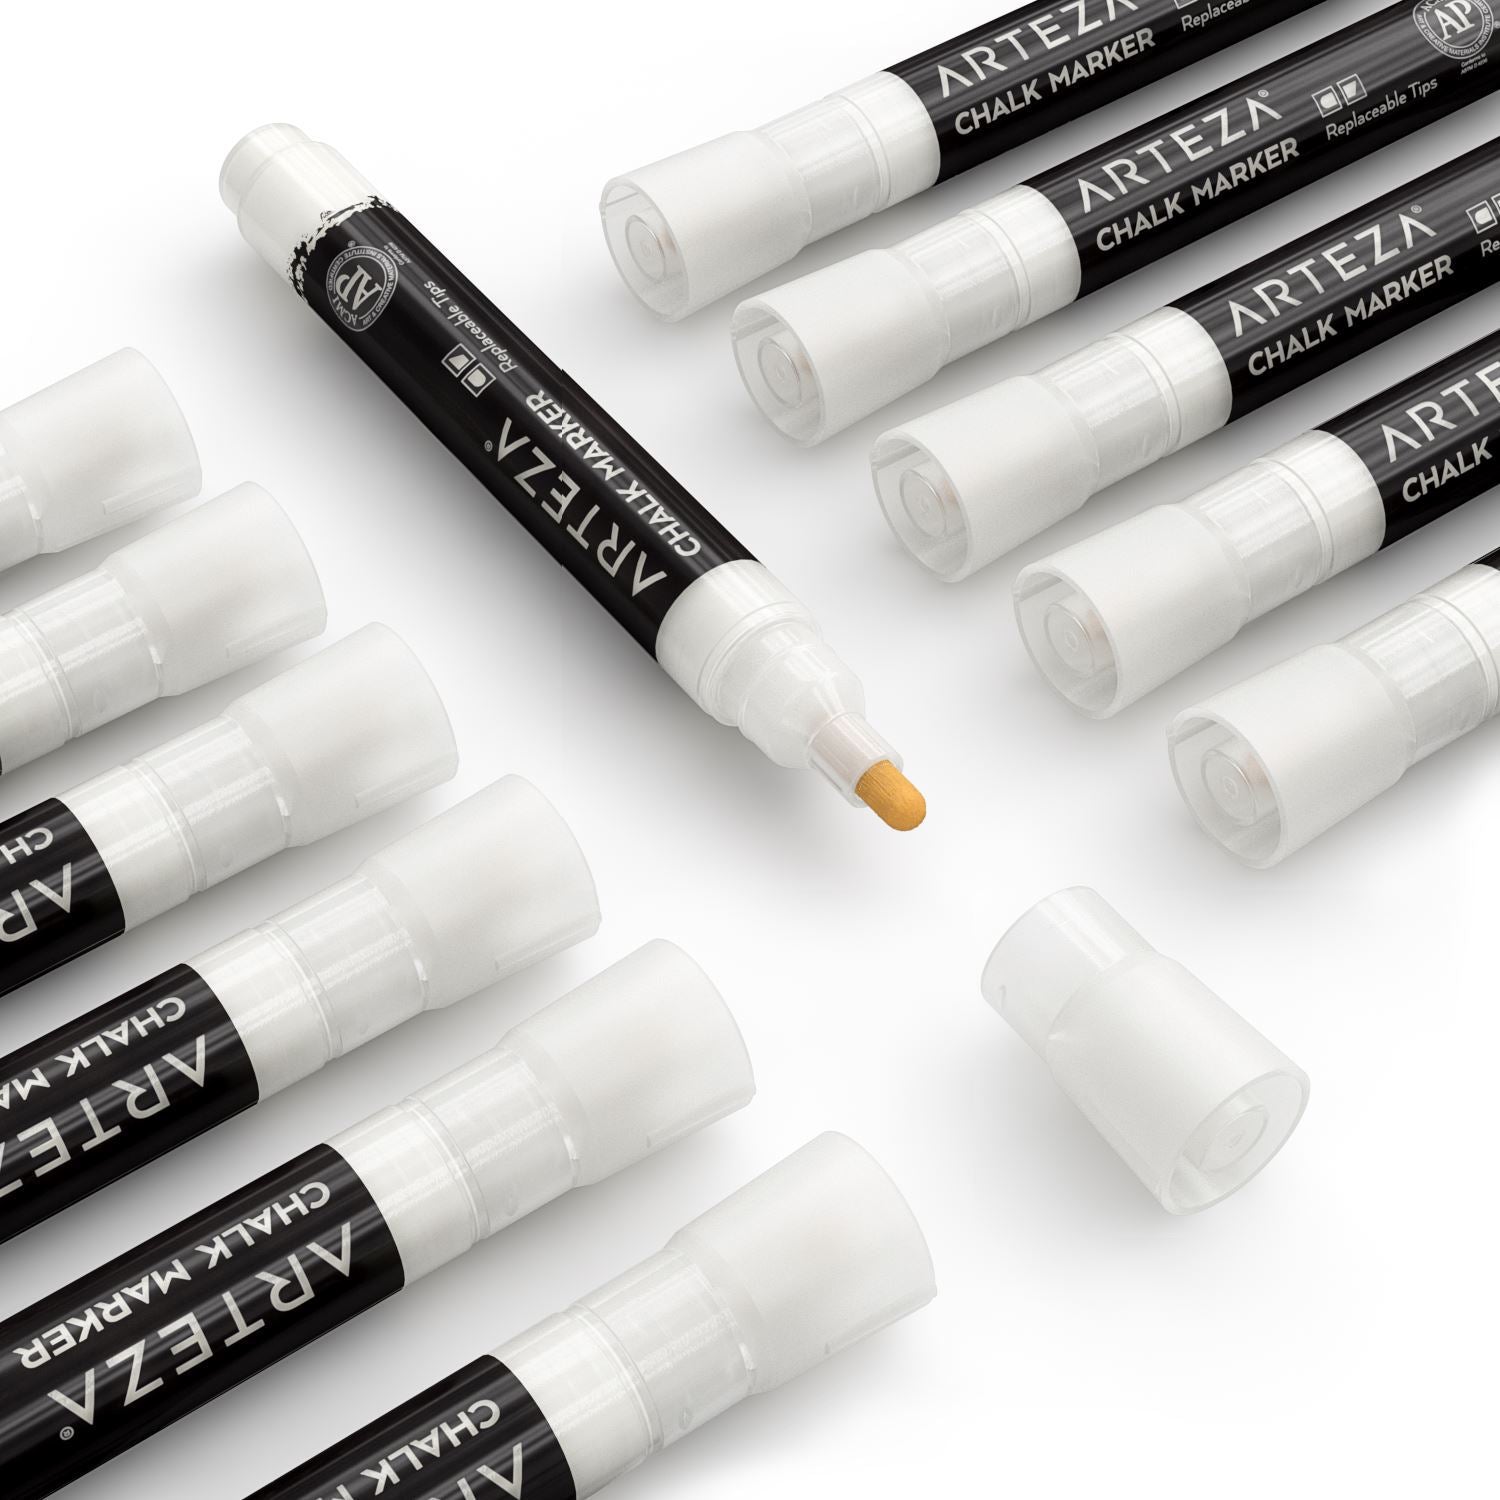 Liquid Chalk Markers, White - Set of 12 –